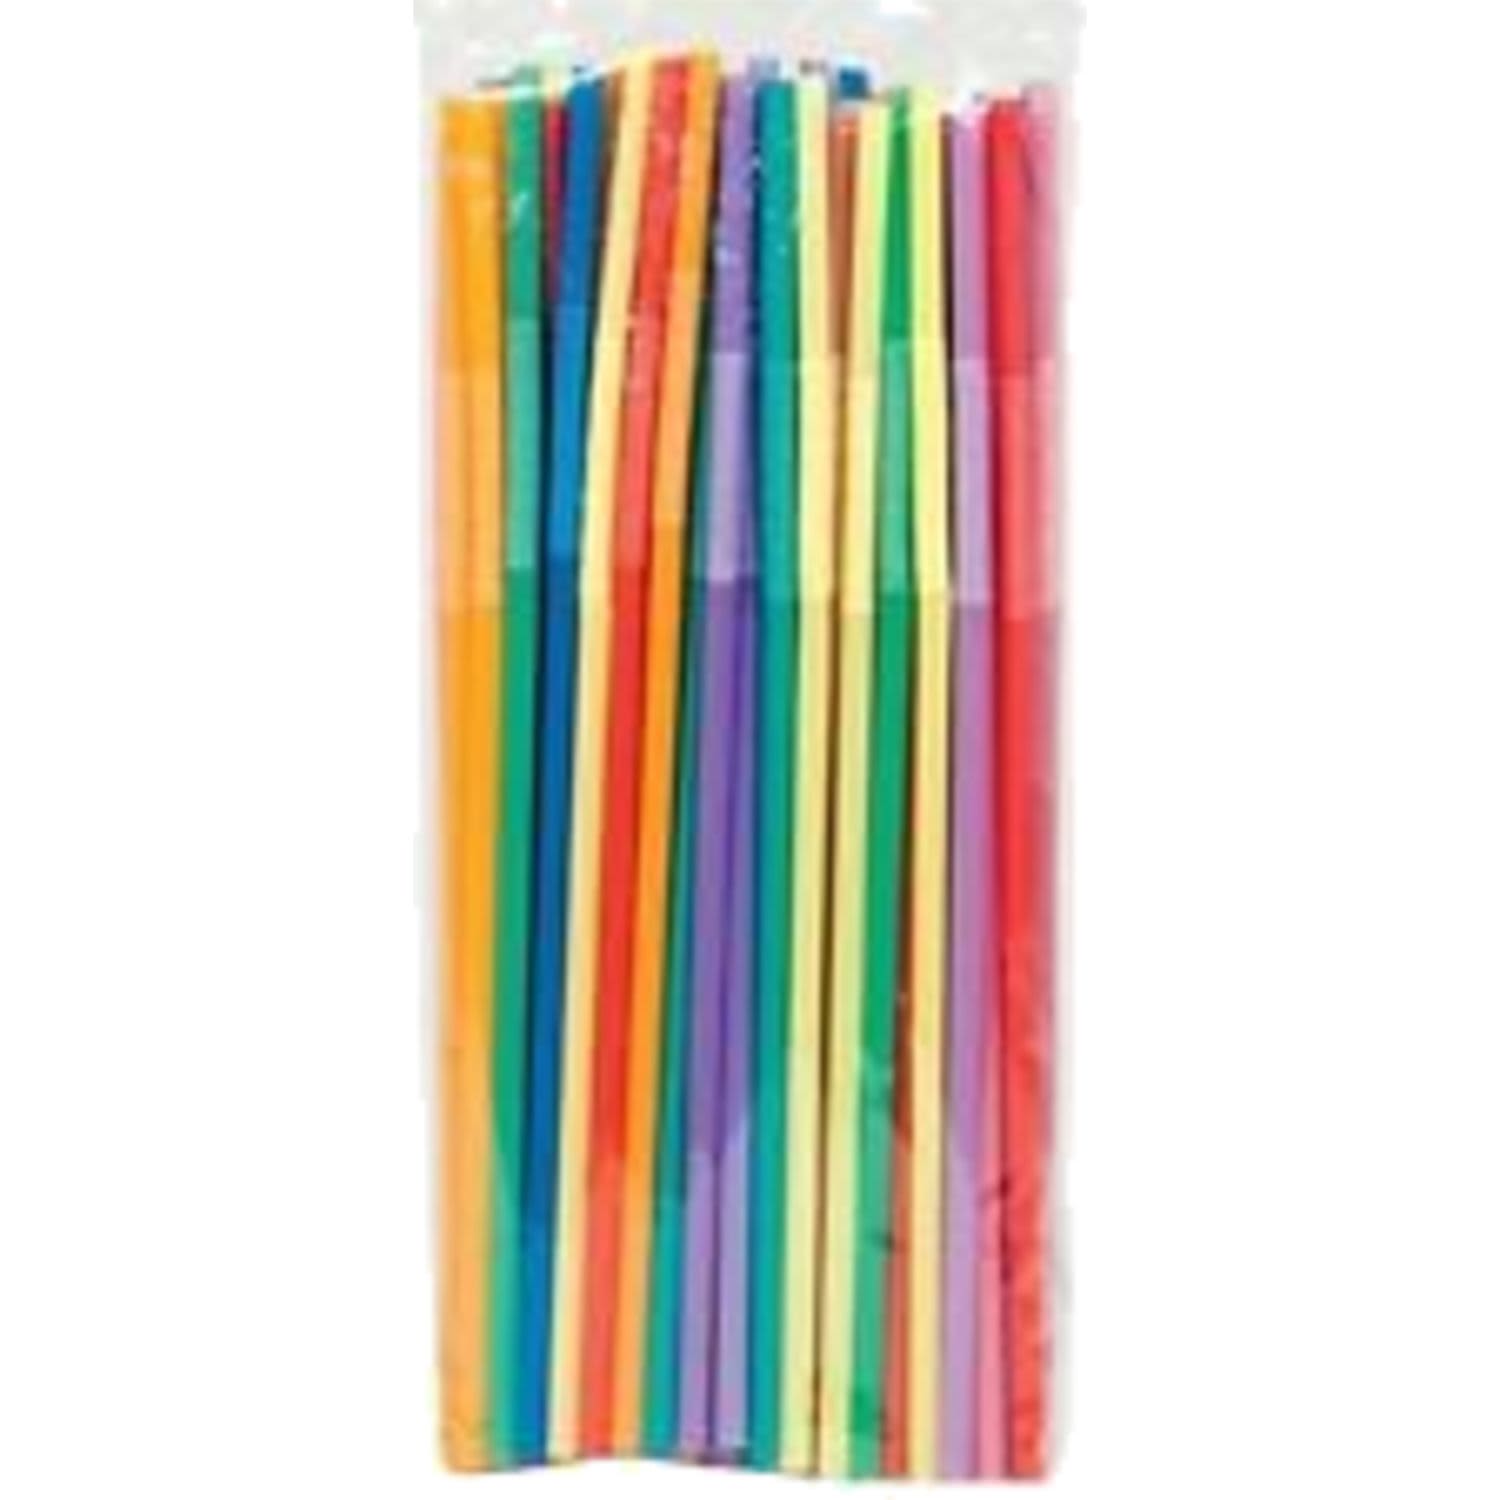 Korbond Drinking Straws, 50 Each